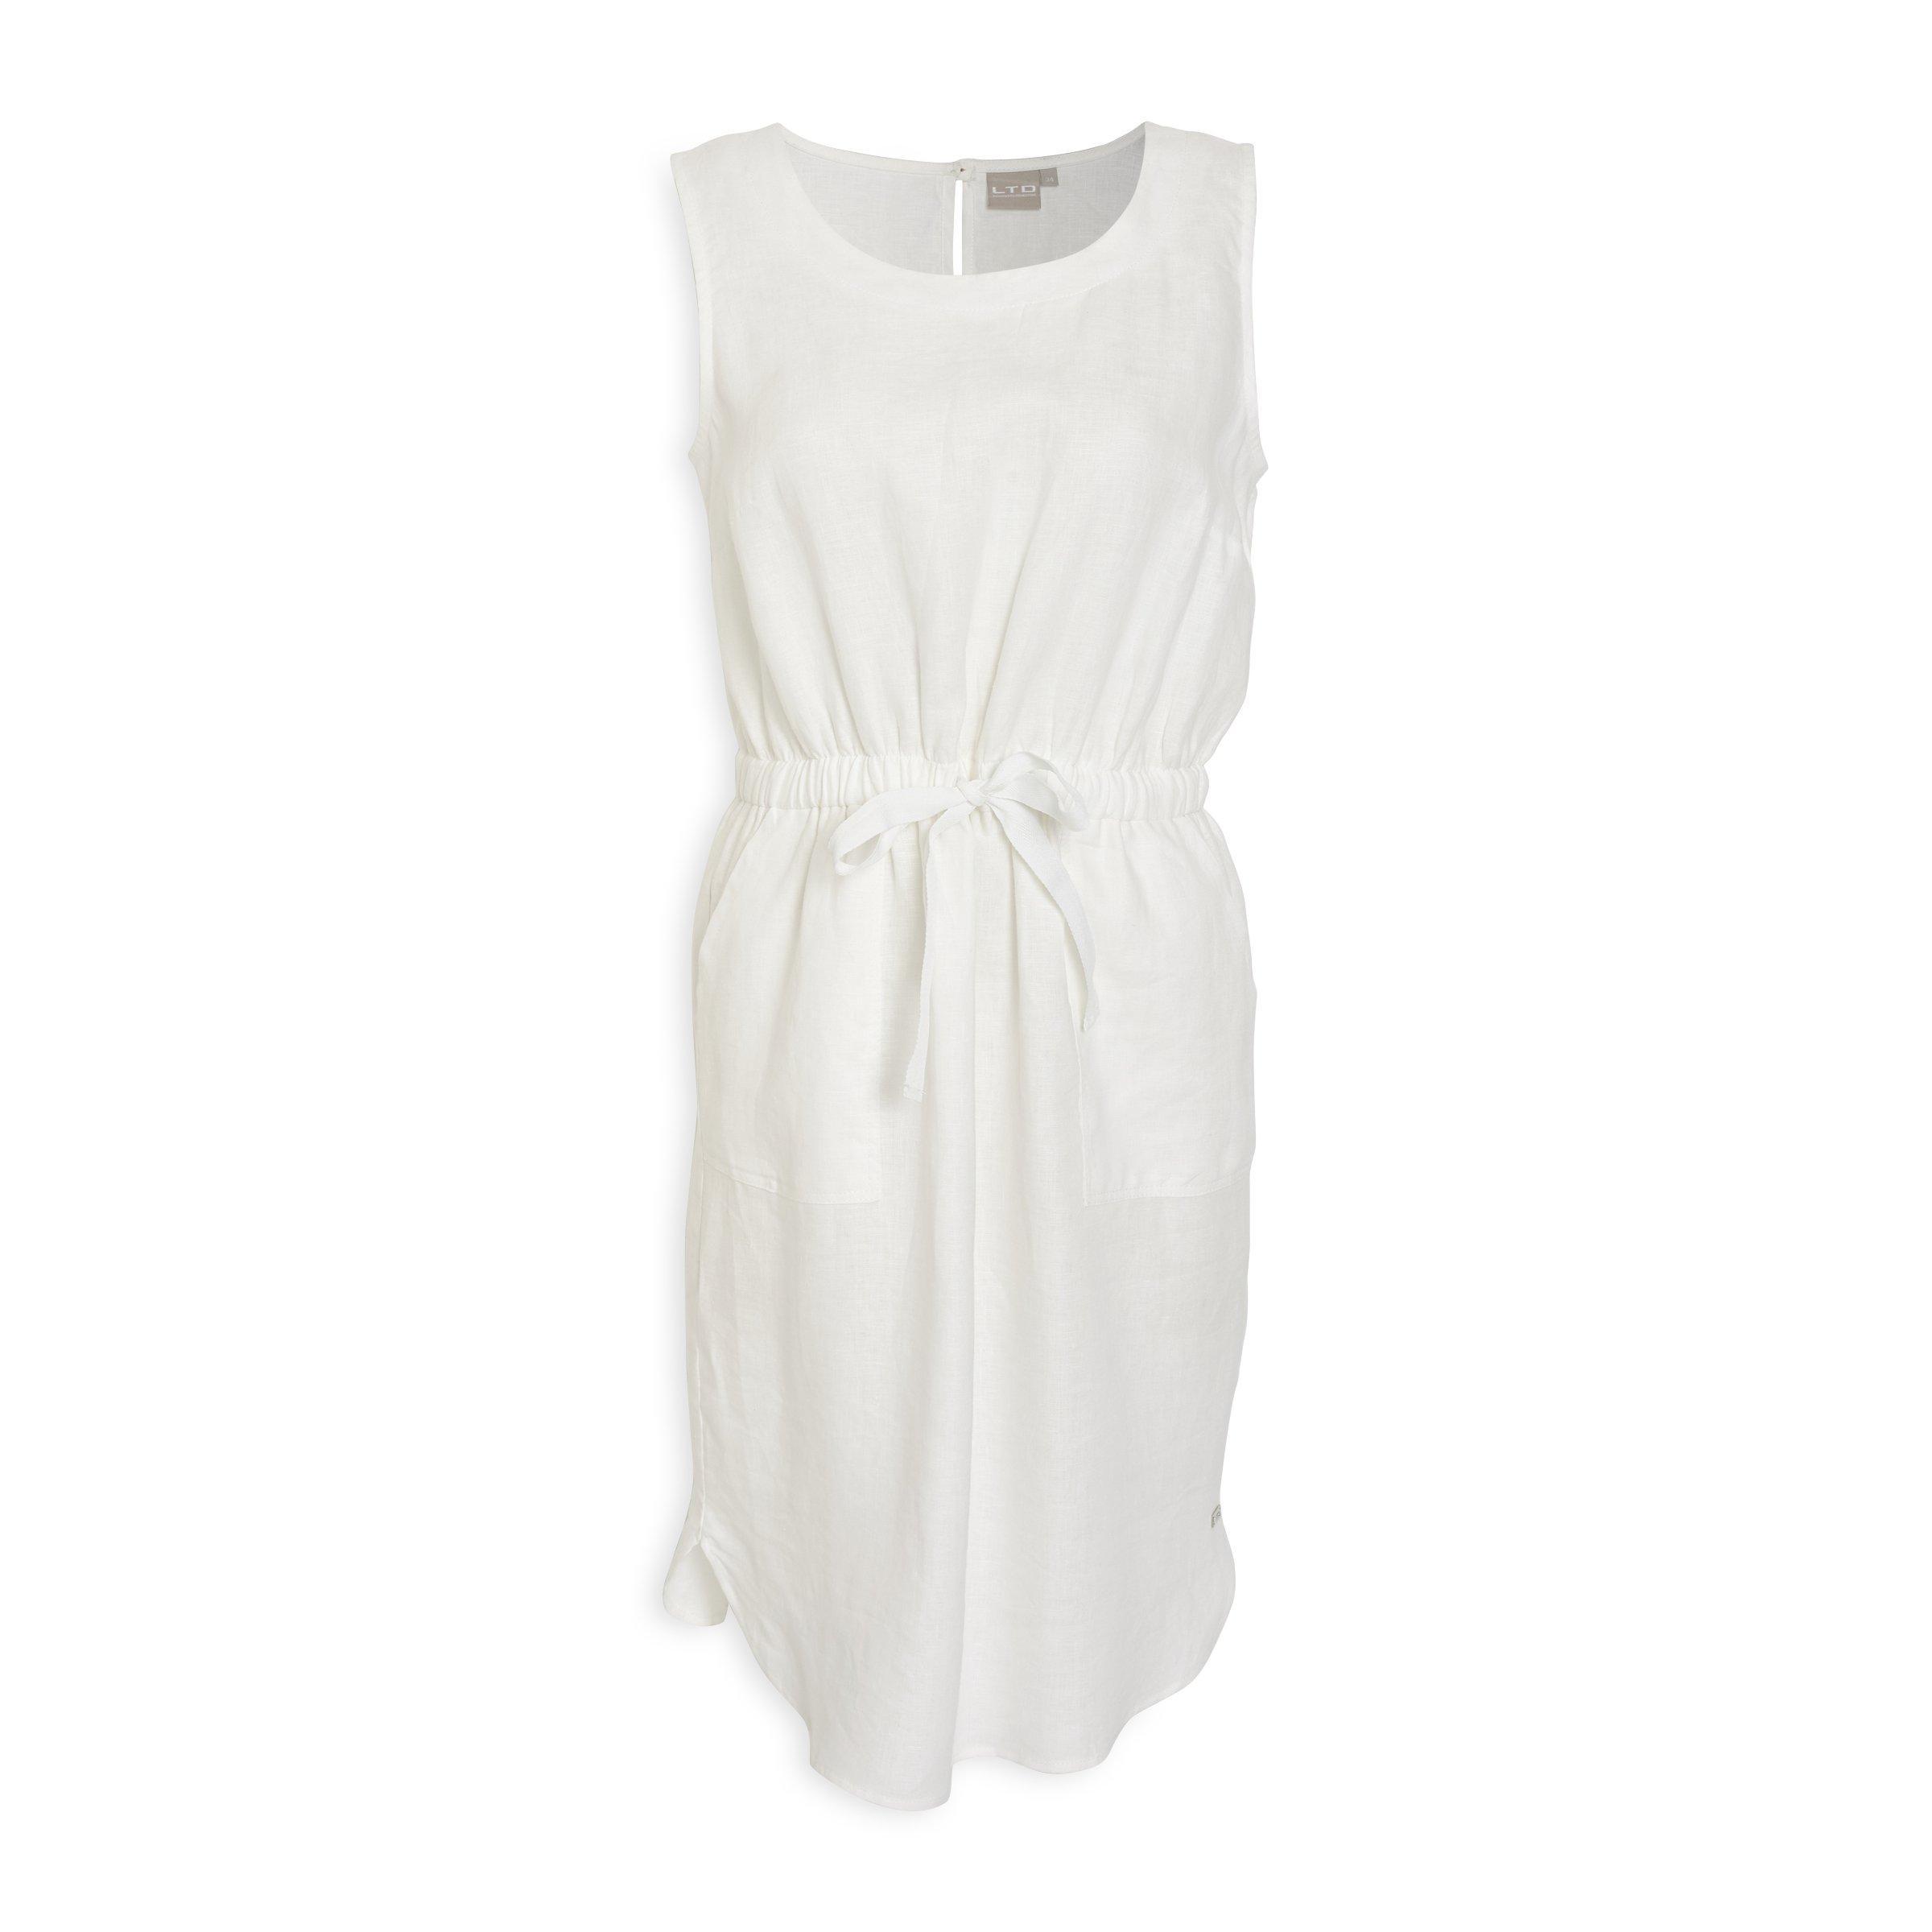 Buy LTD Woman White Waisted Dress Online | Truworths